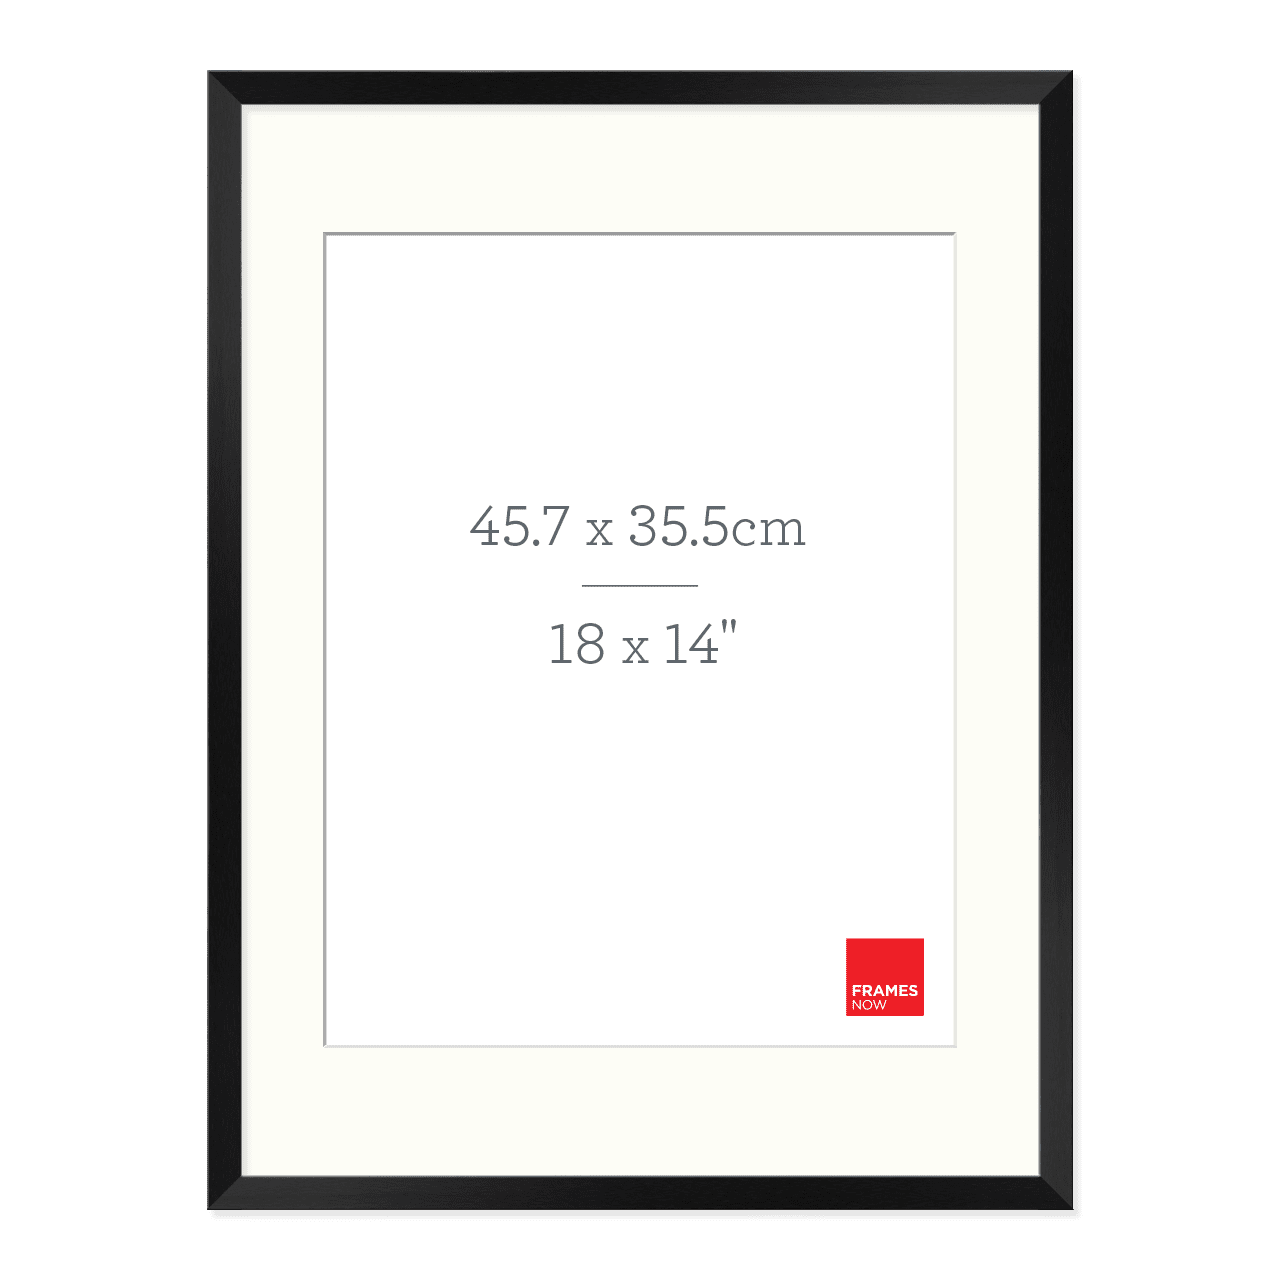 Premium Matte Black Box Picture Frame with Mat Board for 45.7 x 35.5cm Artwork